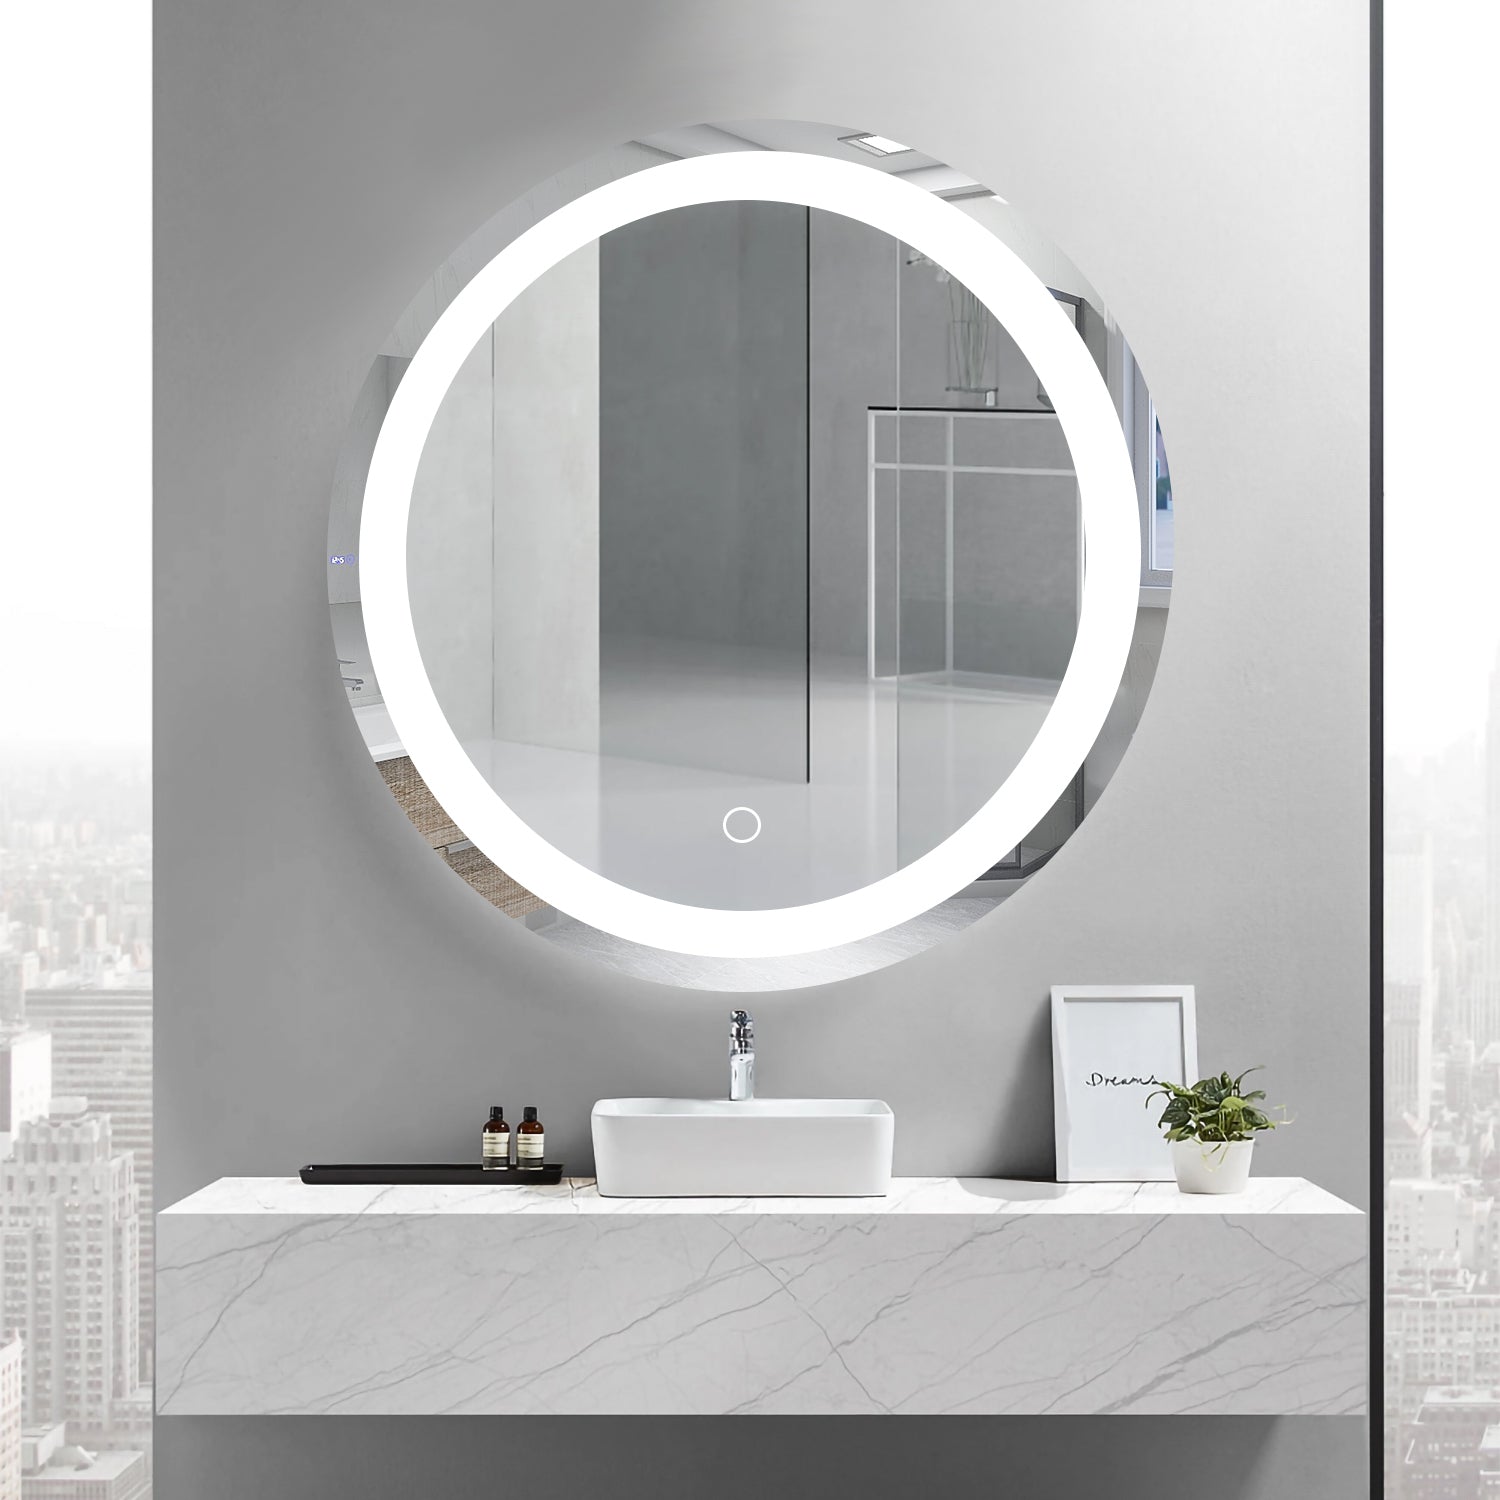 24" Round Dimmable Anti-Fog LED Light Bathroom Vanity Mirror